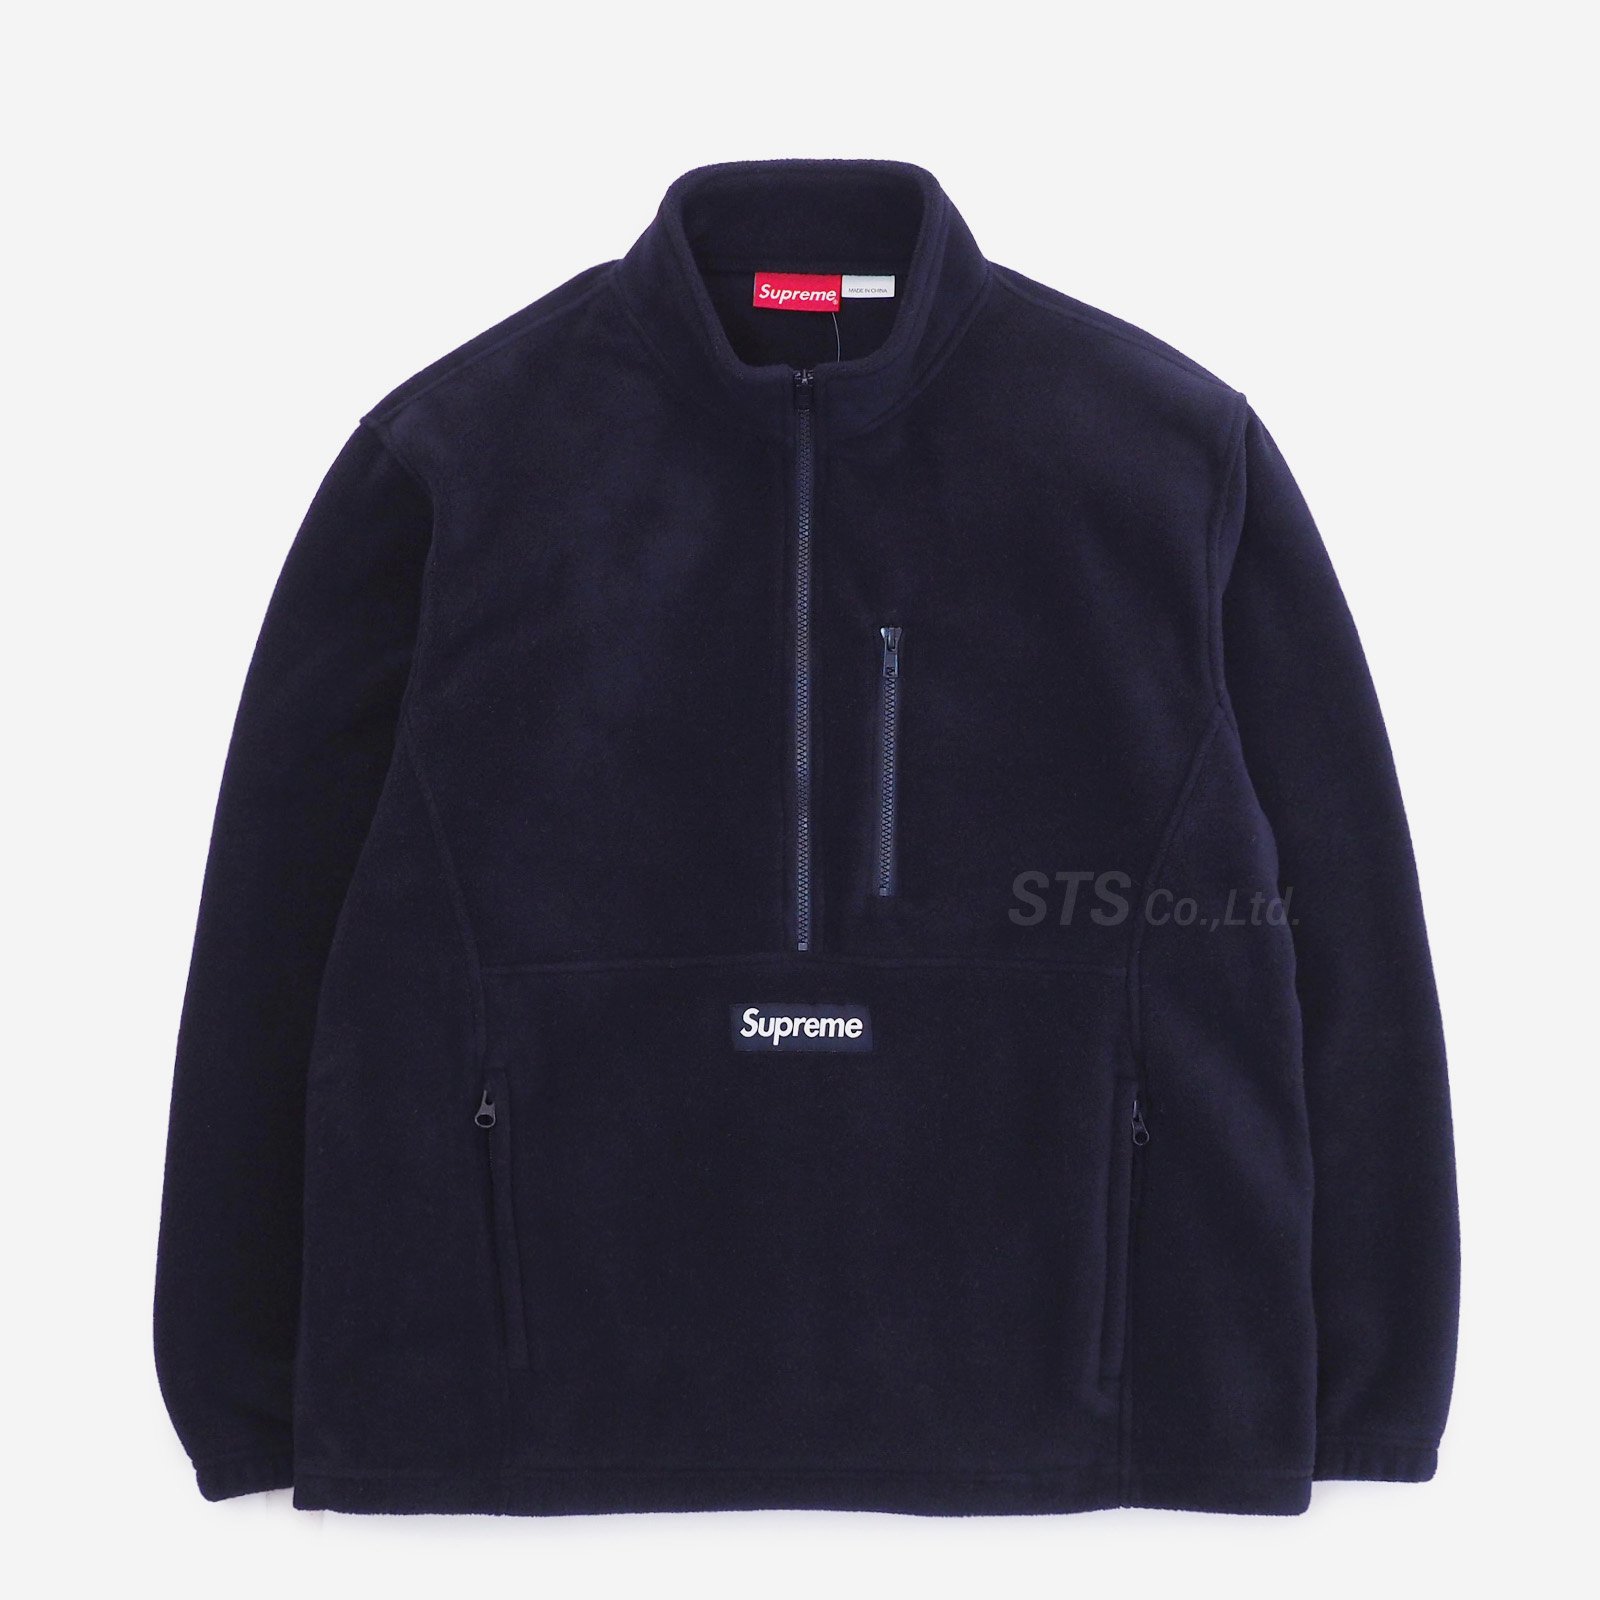 Polartec ® Half Zip Pullover Natural　【XL